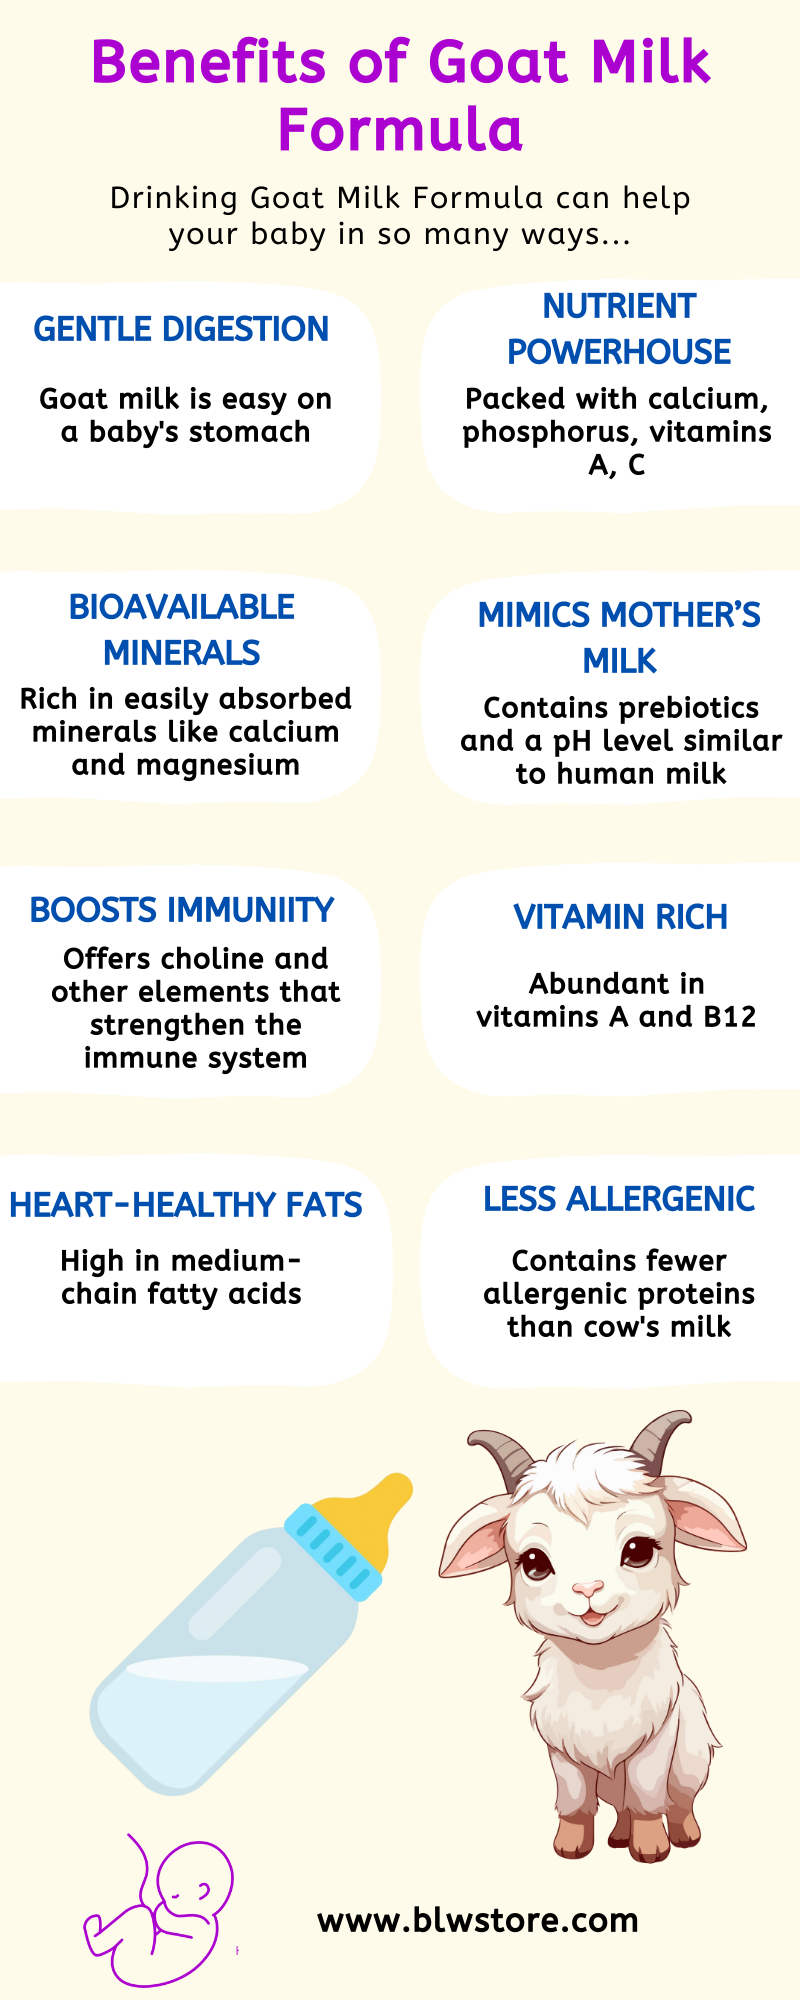 Benefits-of-Goat-Milk-Formula-Infographic